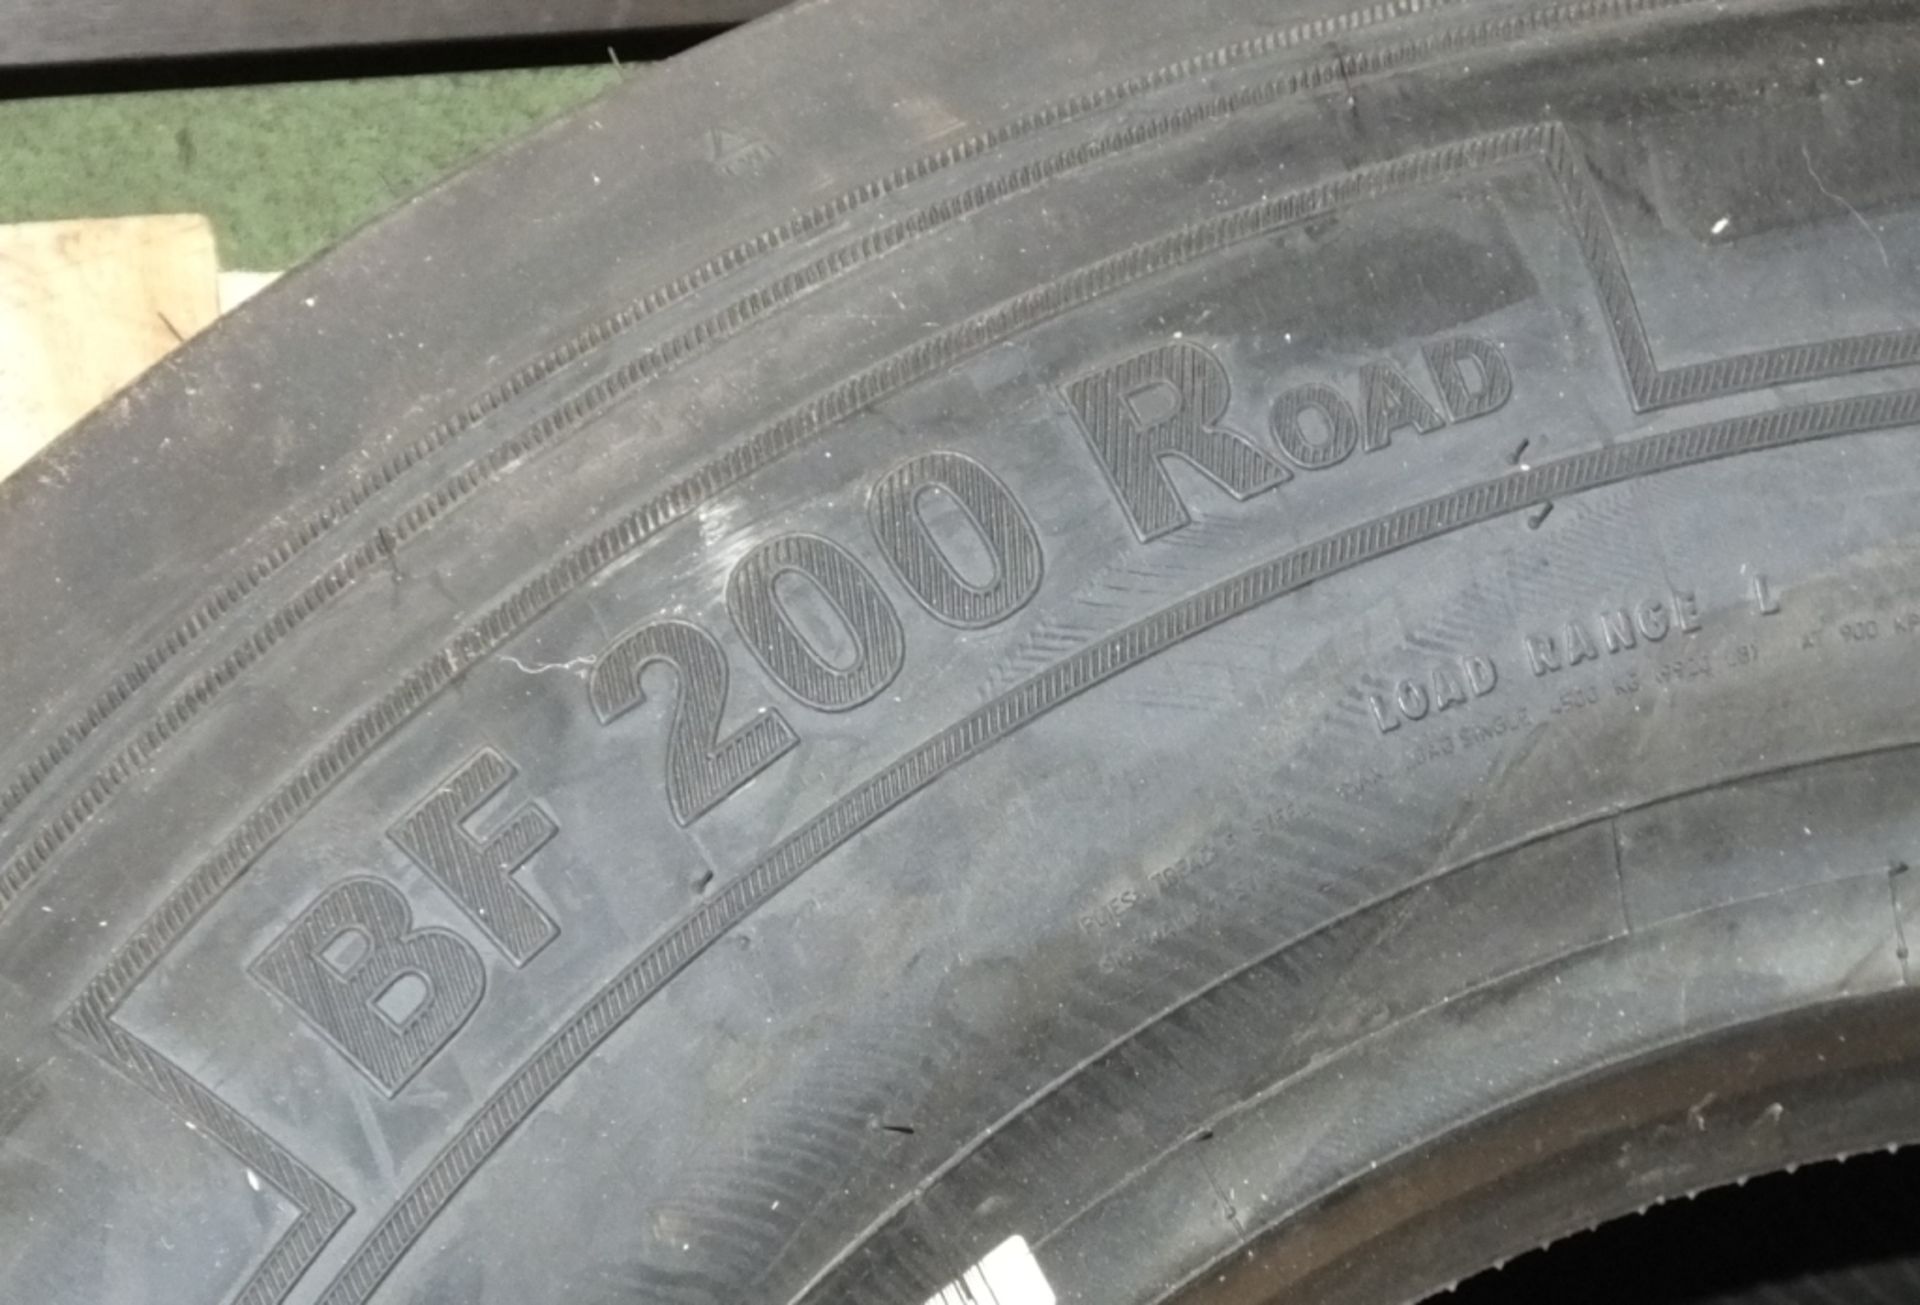 Barum BF 200 Road tire - 385/55 R 22.5 (new & unused) - Image 3 of 7